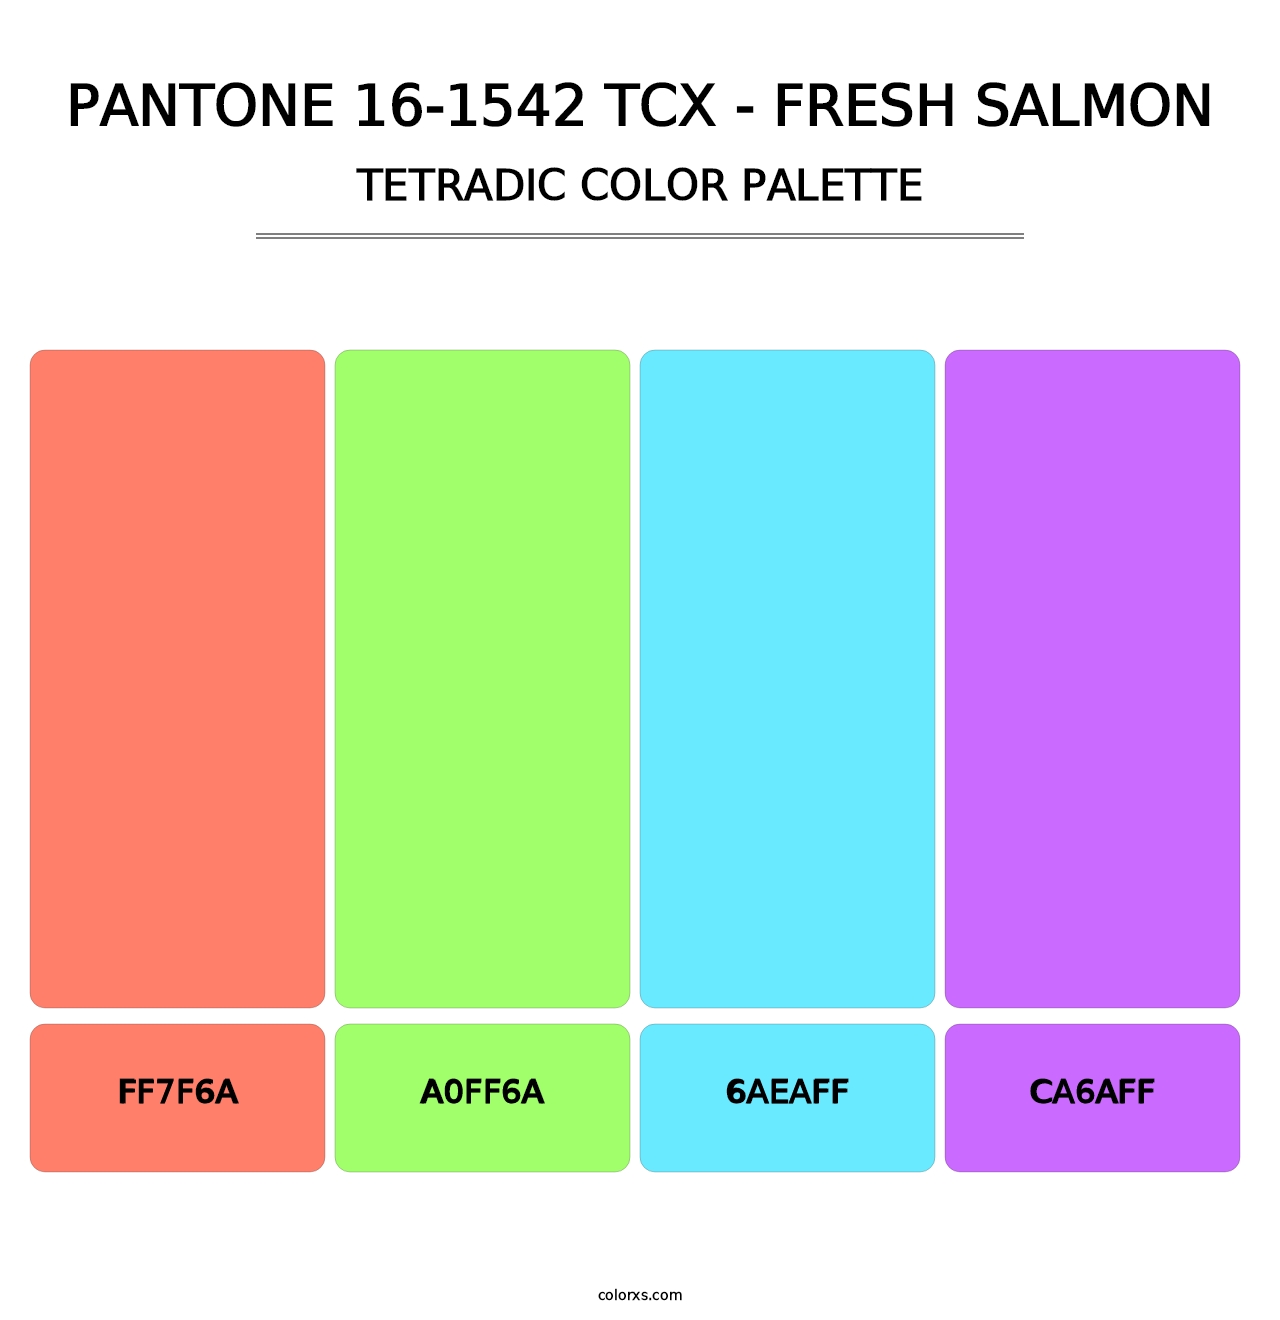 PANTONE 16-1542 TCX - Fresh Salmon - Tetradic Color Palette